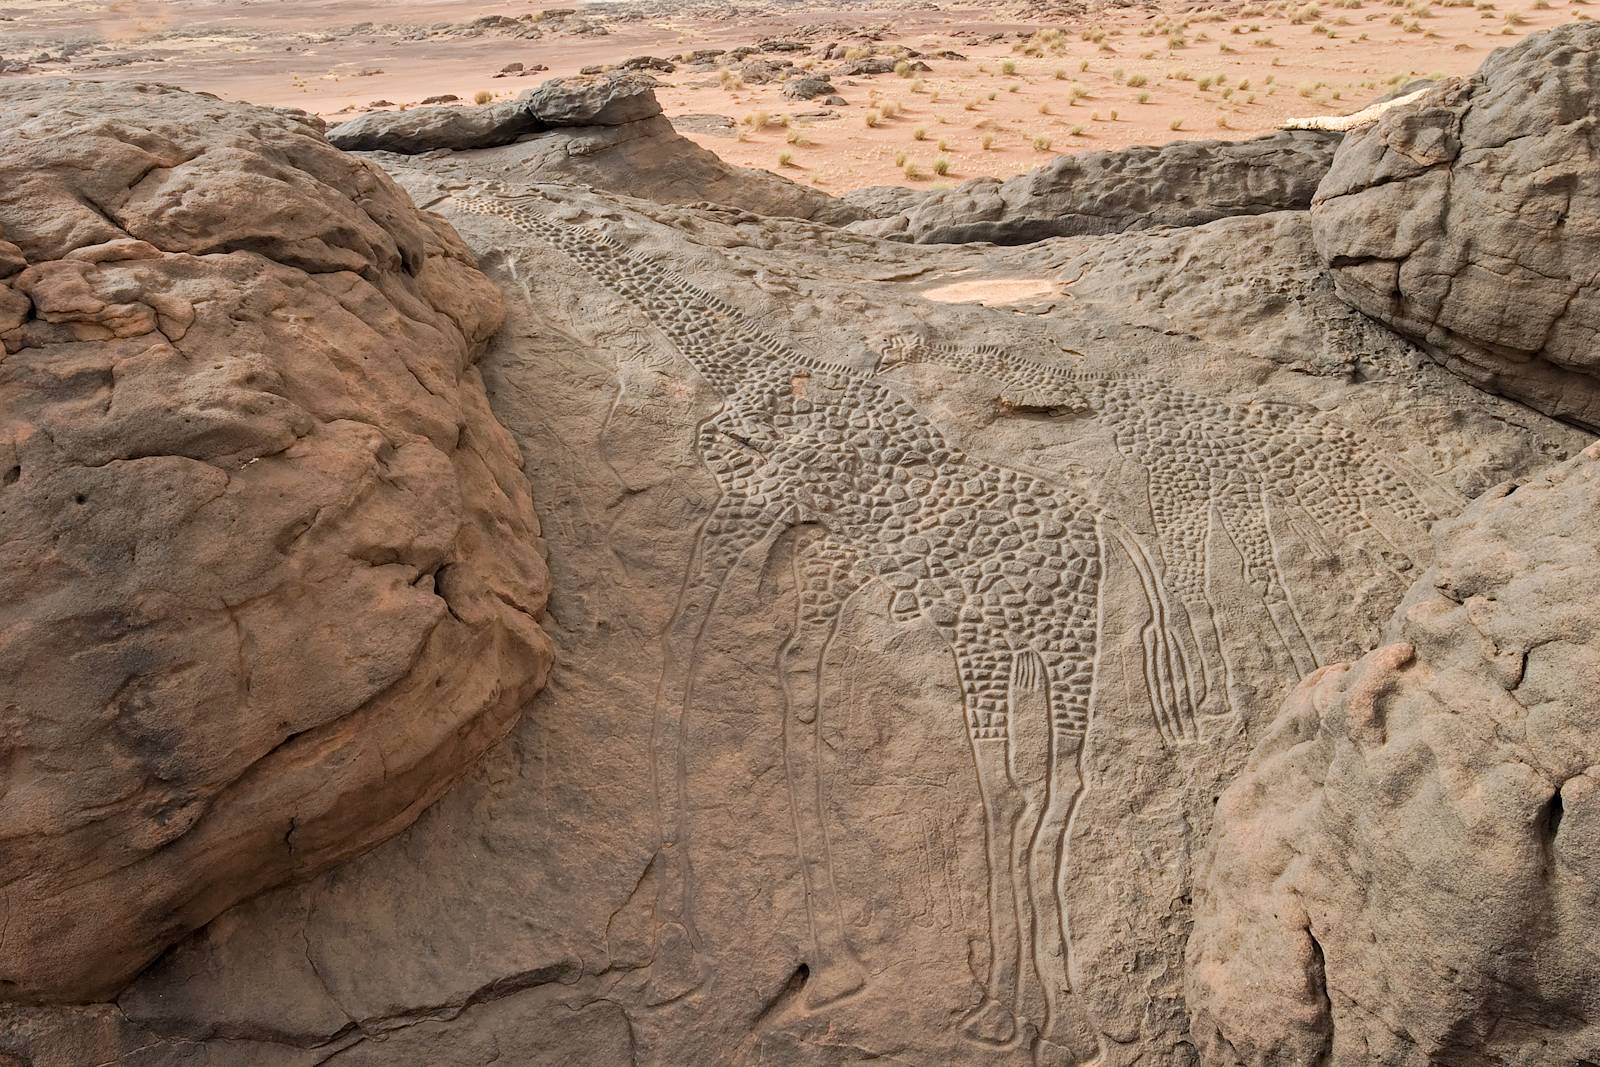 10000 year old rock engravings of giraffes in the Sahara Desert, Niger